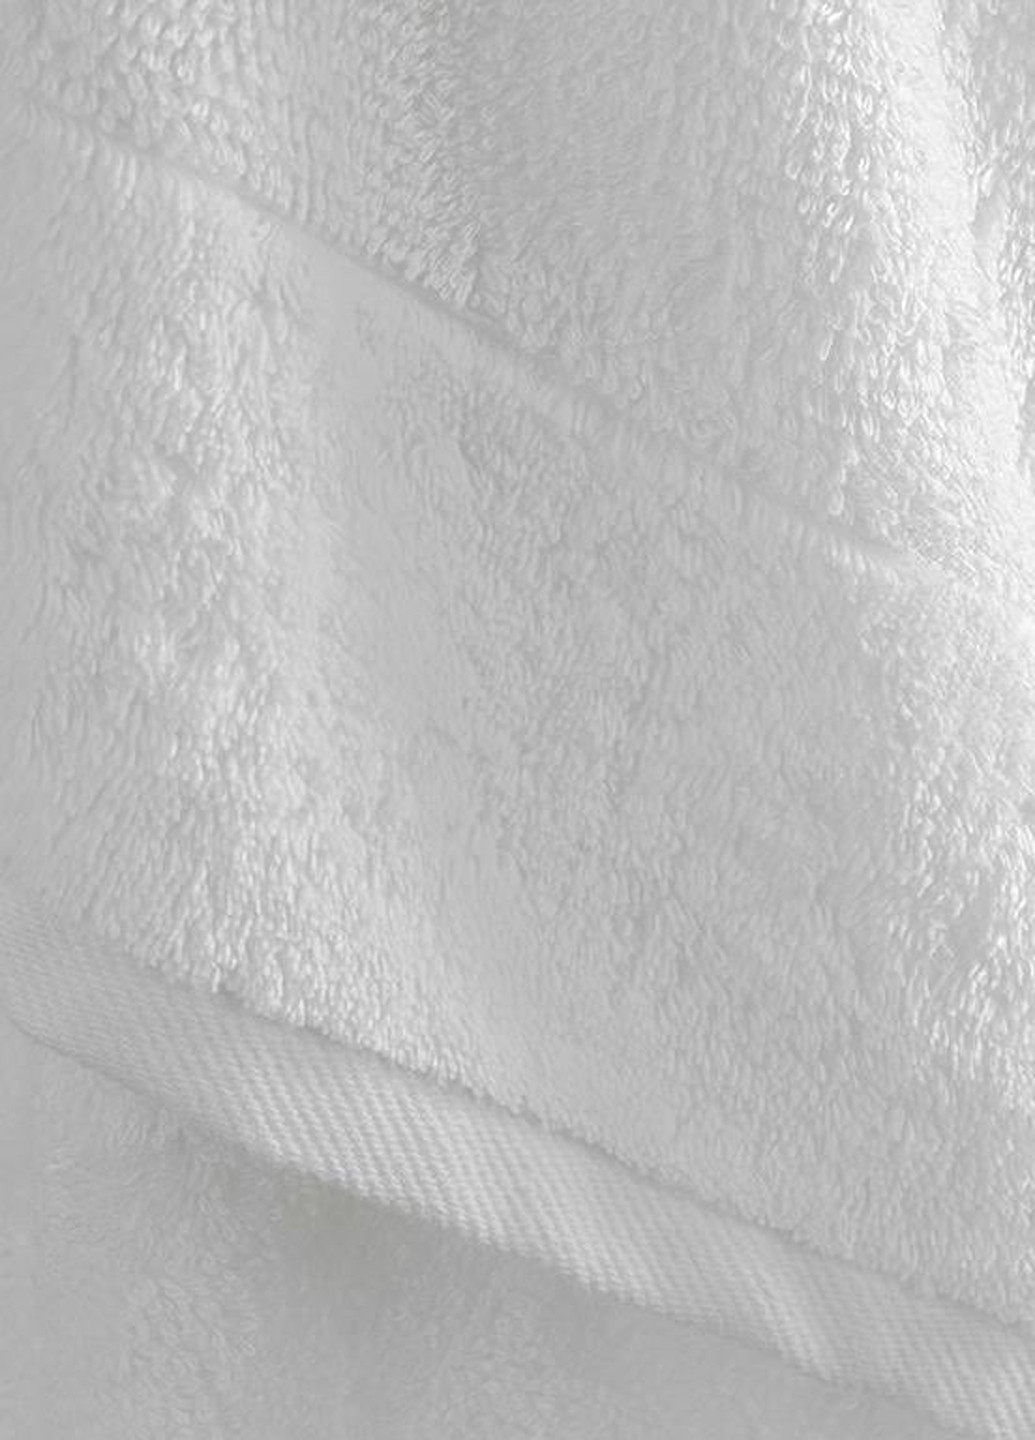 English Home полотенце банное, 90х150 см однотонный белый производство - Турция